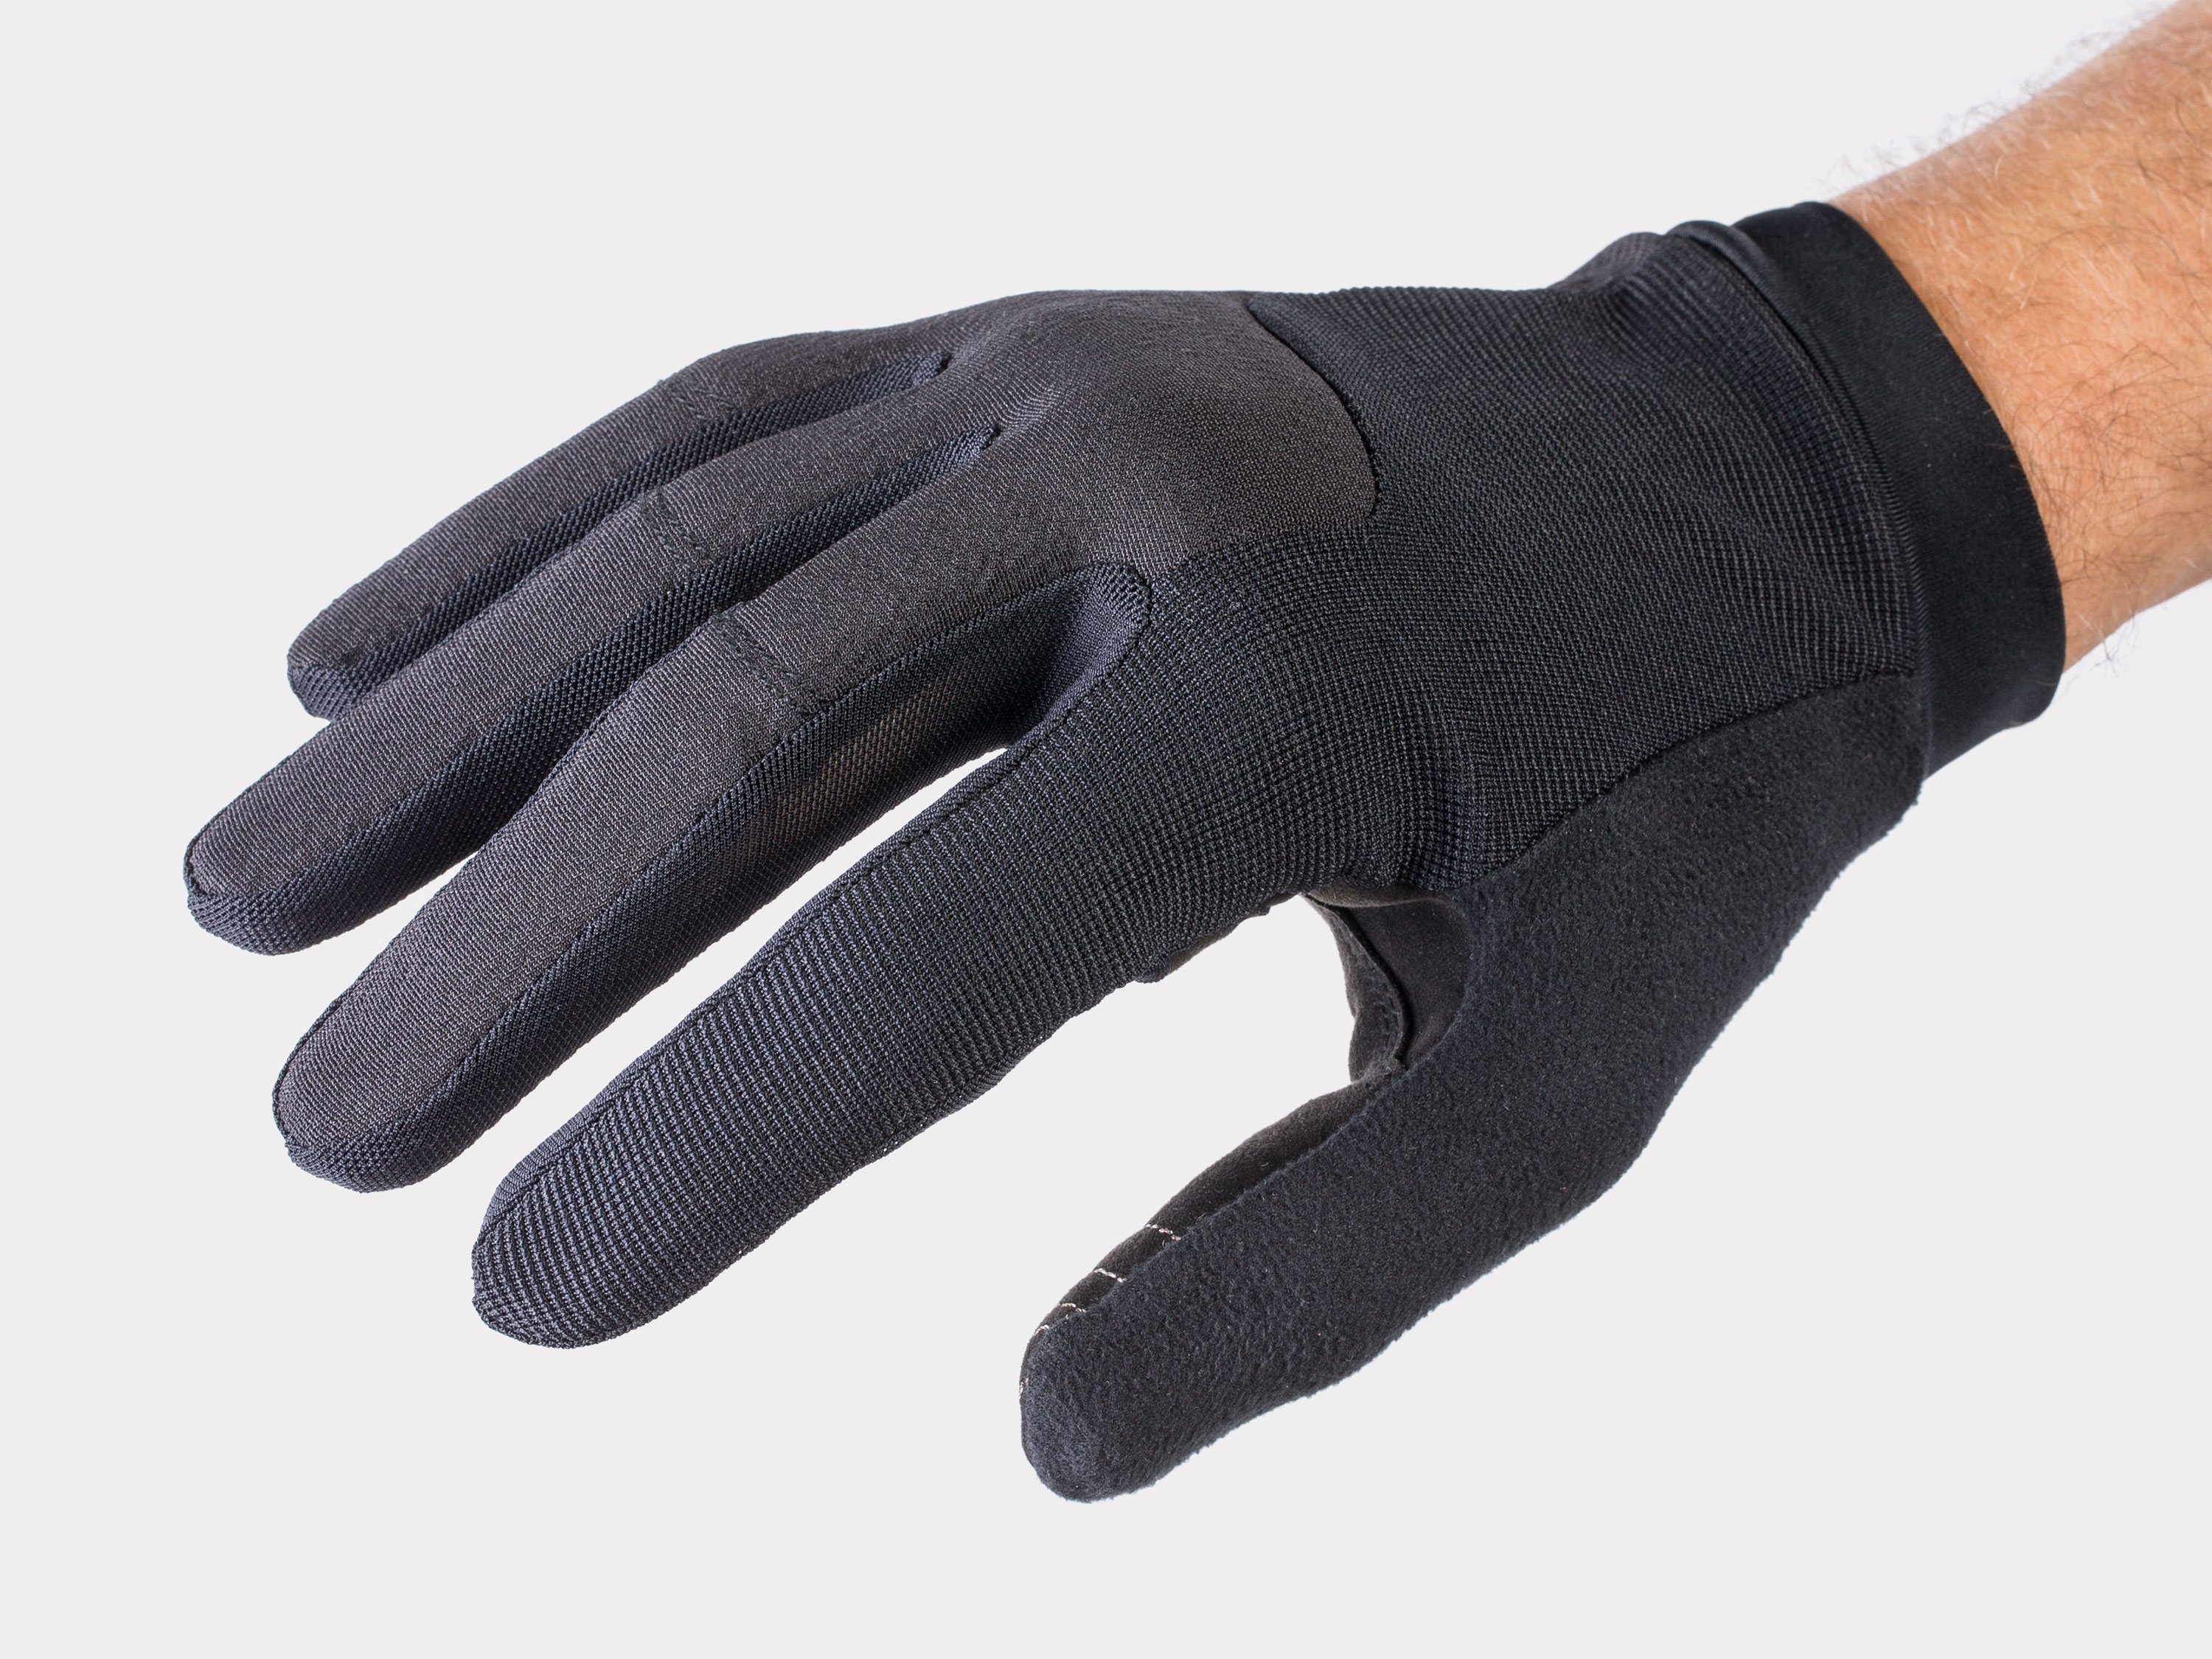 mountain bike gloves uk